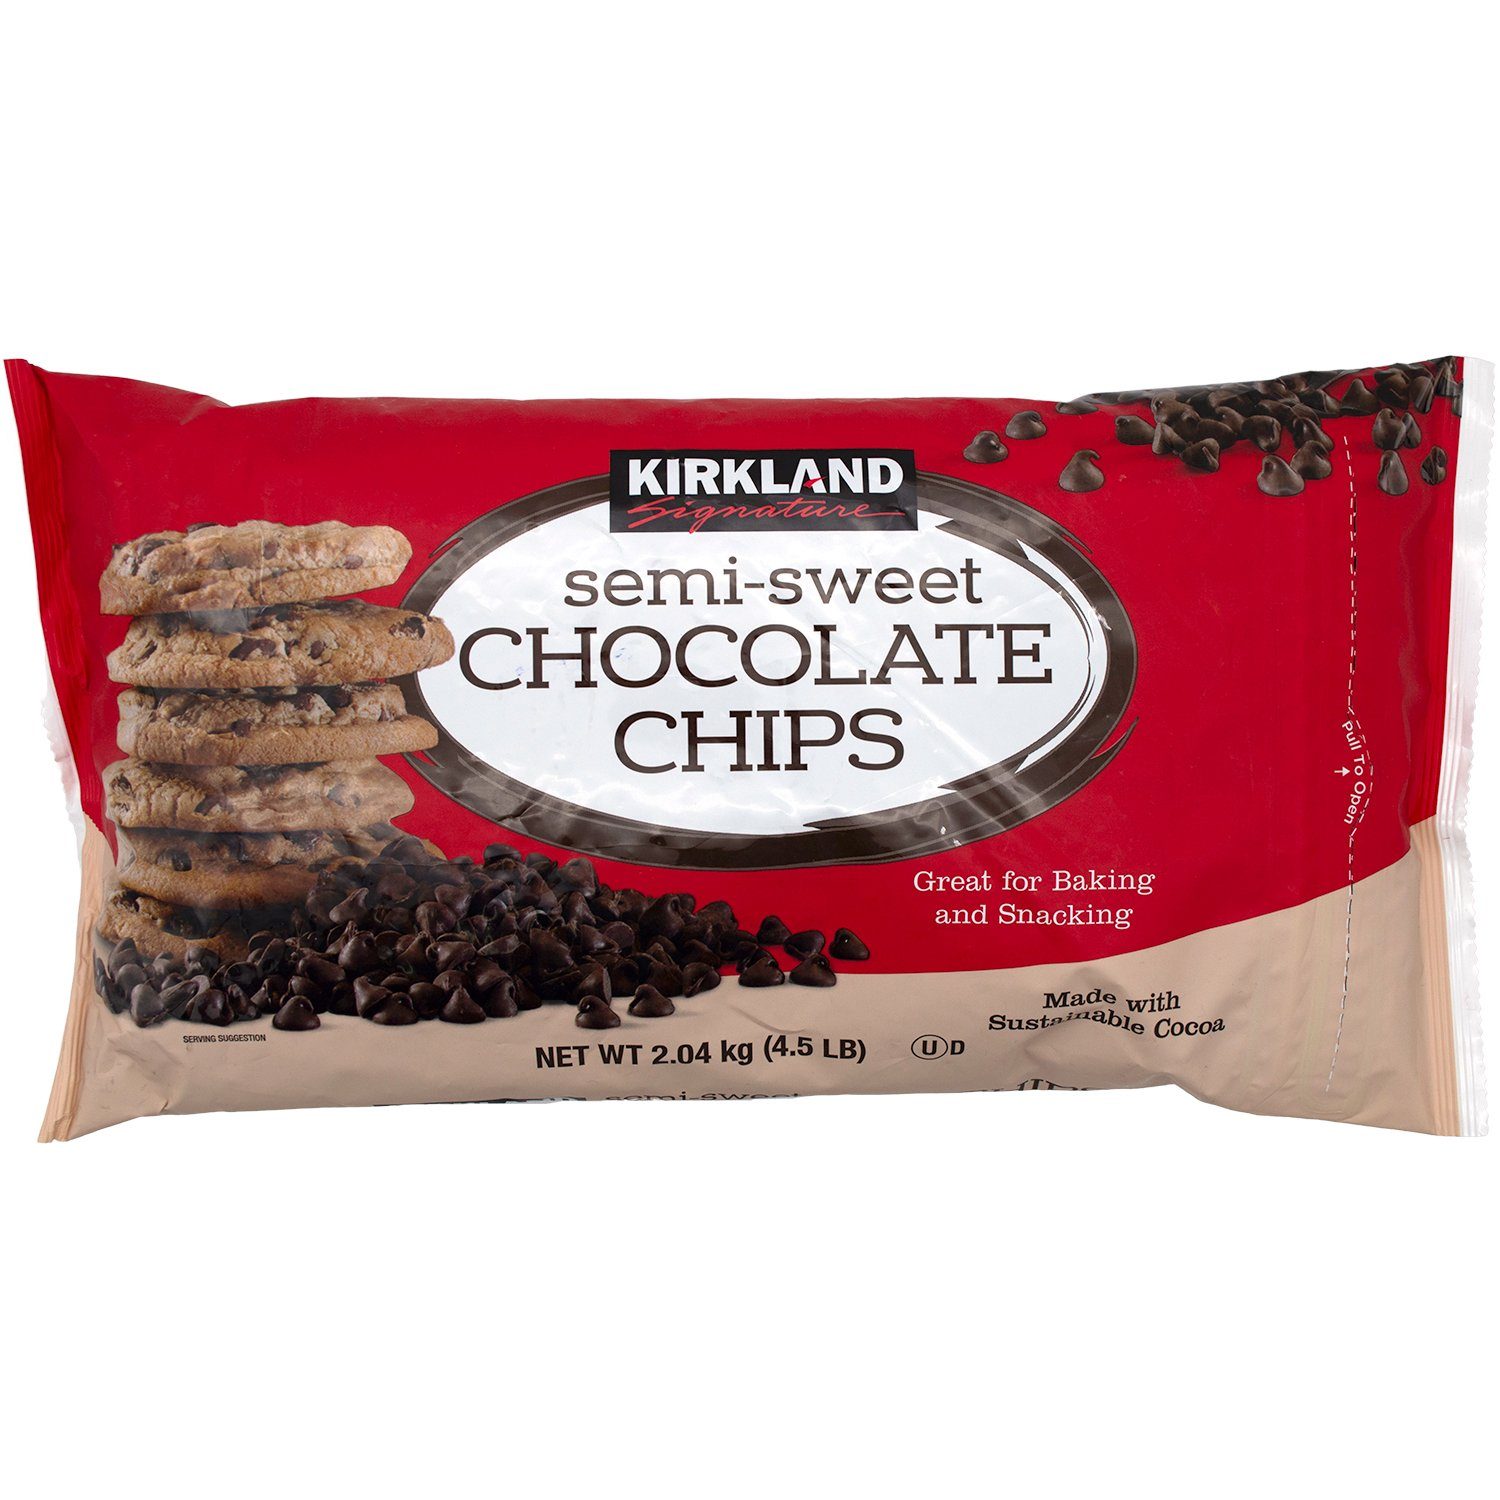 Kirkland Signature Semi-Sweet Chocolate Chips, 4.5 Pound